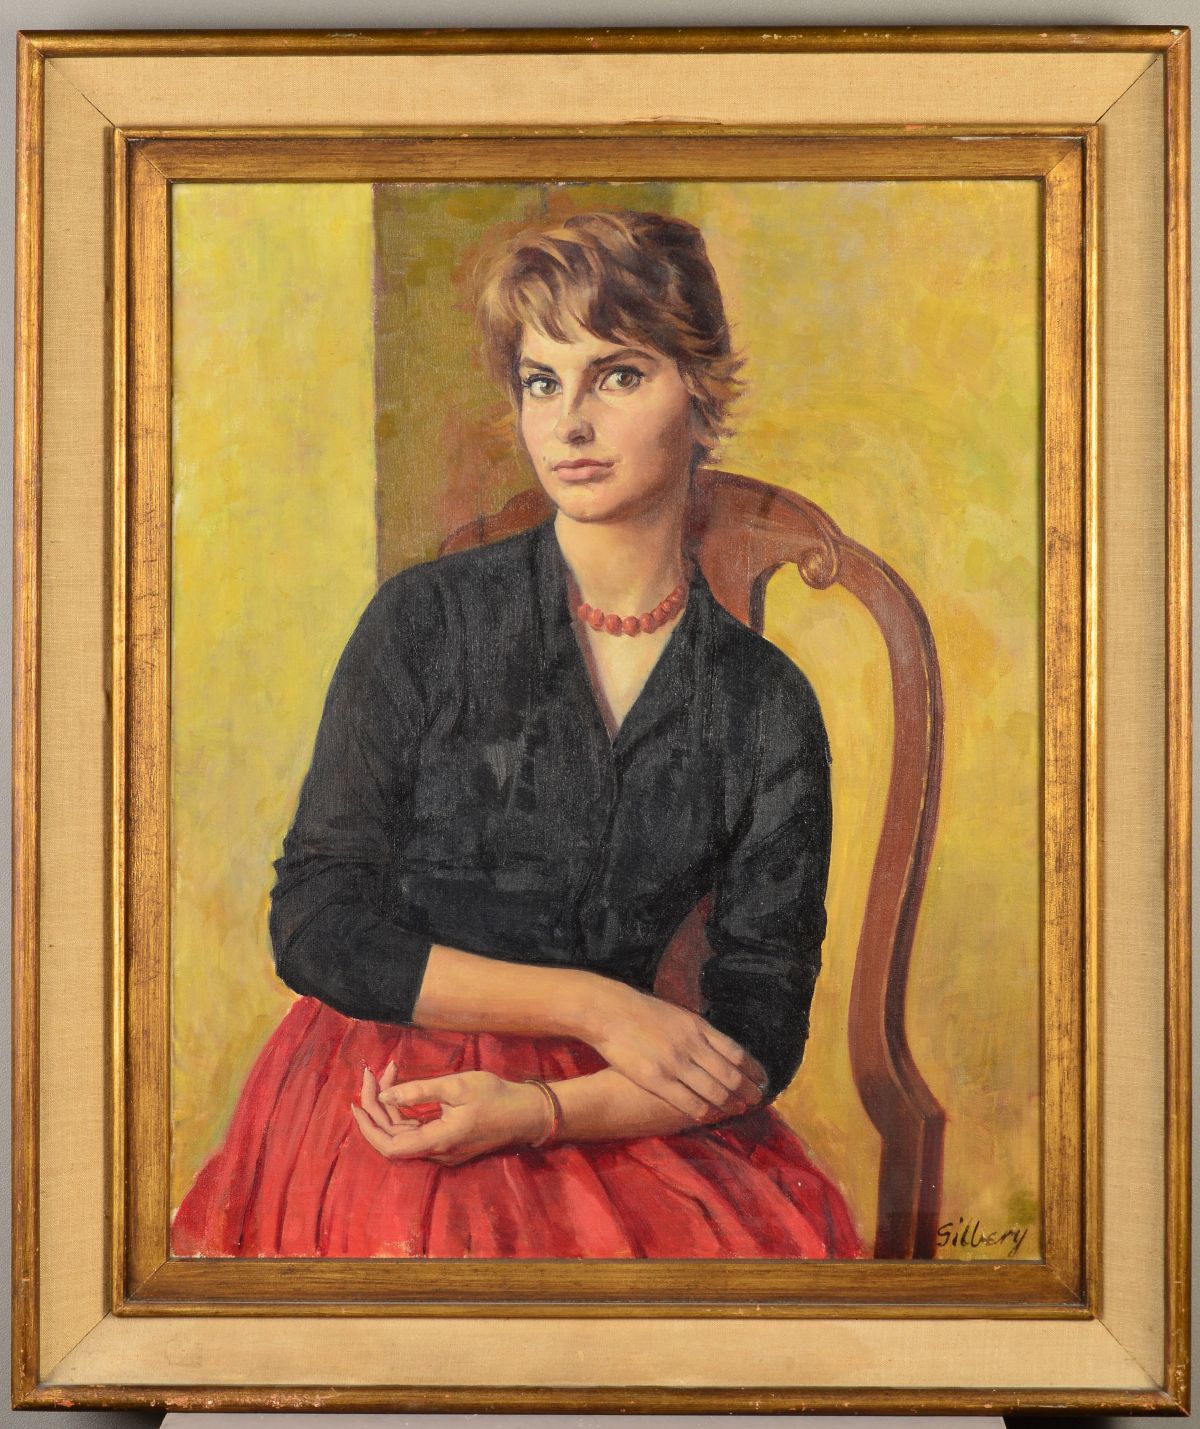 MICHAEL GILBERY (BRITISH 1913-2000), 'Christine', a three quarter length portrait of a seated